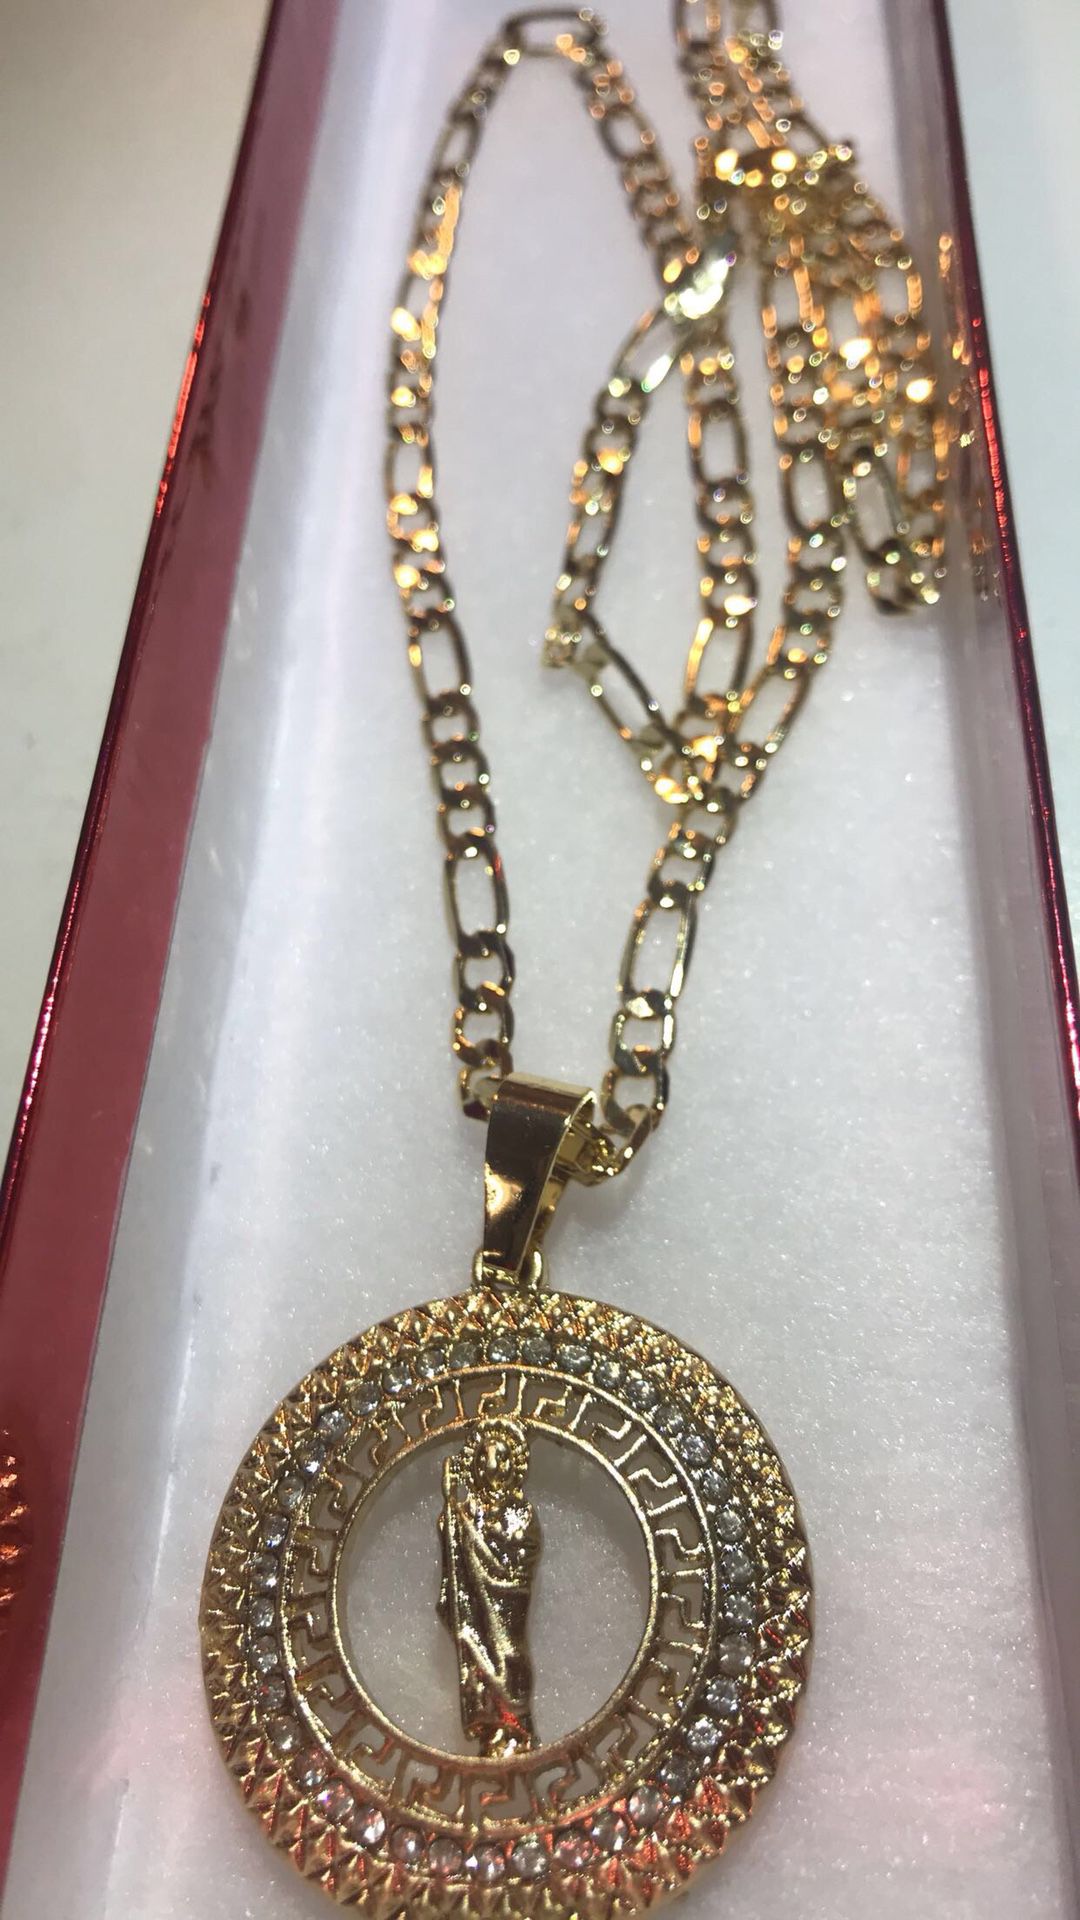 Nice chain with saint Jude pendant